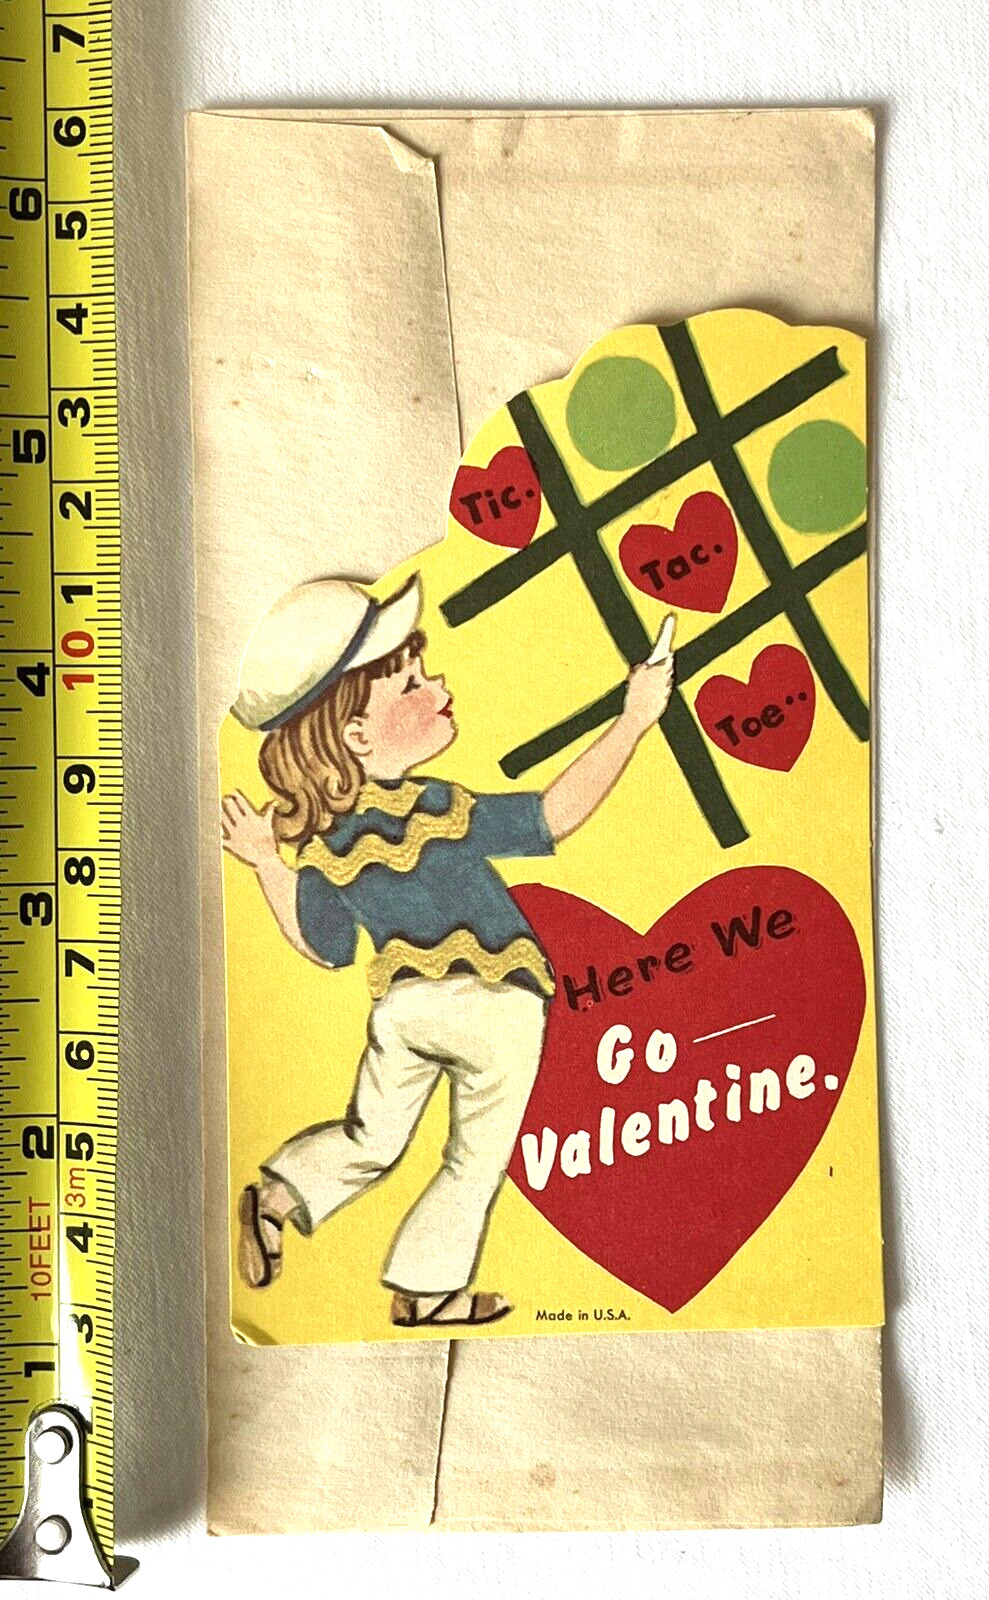 Vintage UNUSED Valentines Day Card Tic Tac Toe Here We Go with ENVELOPE